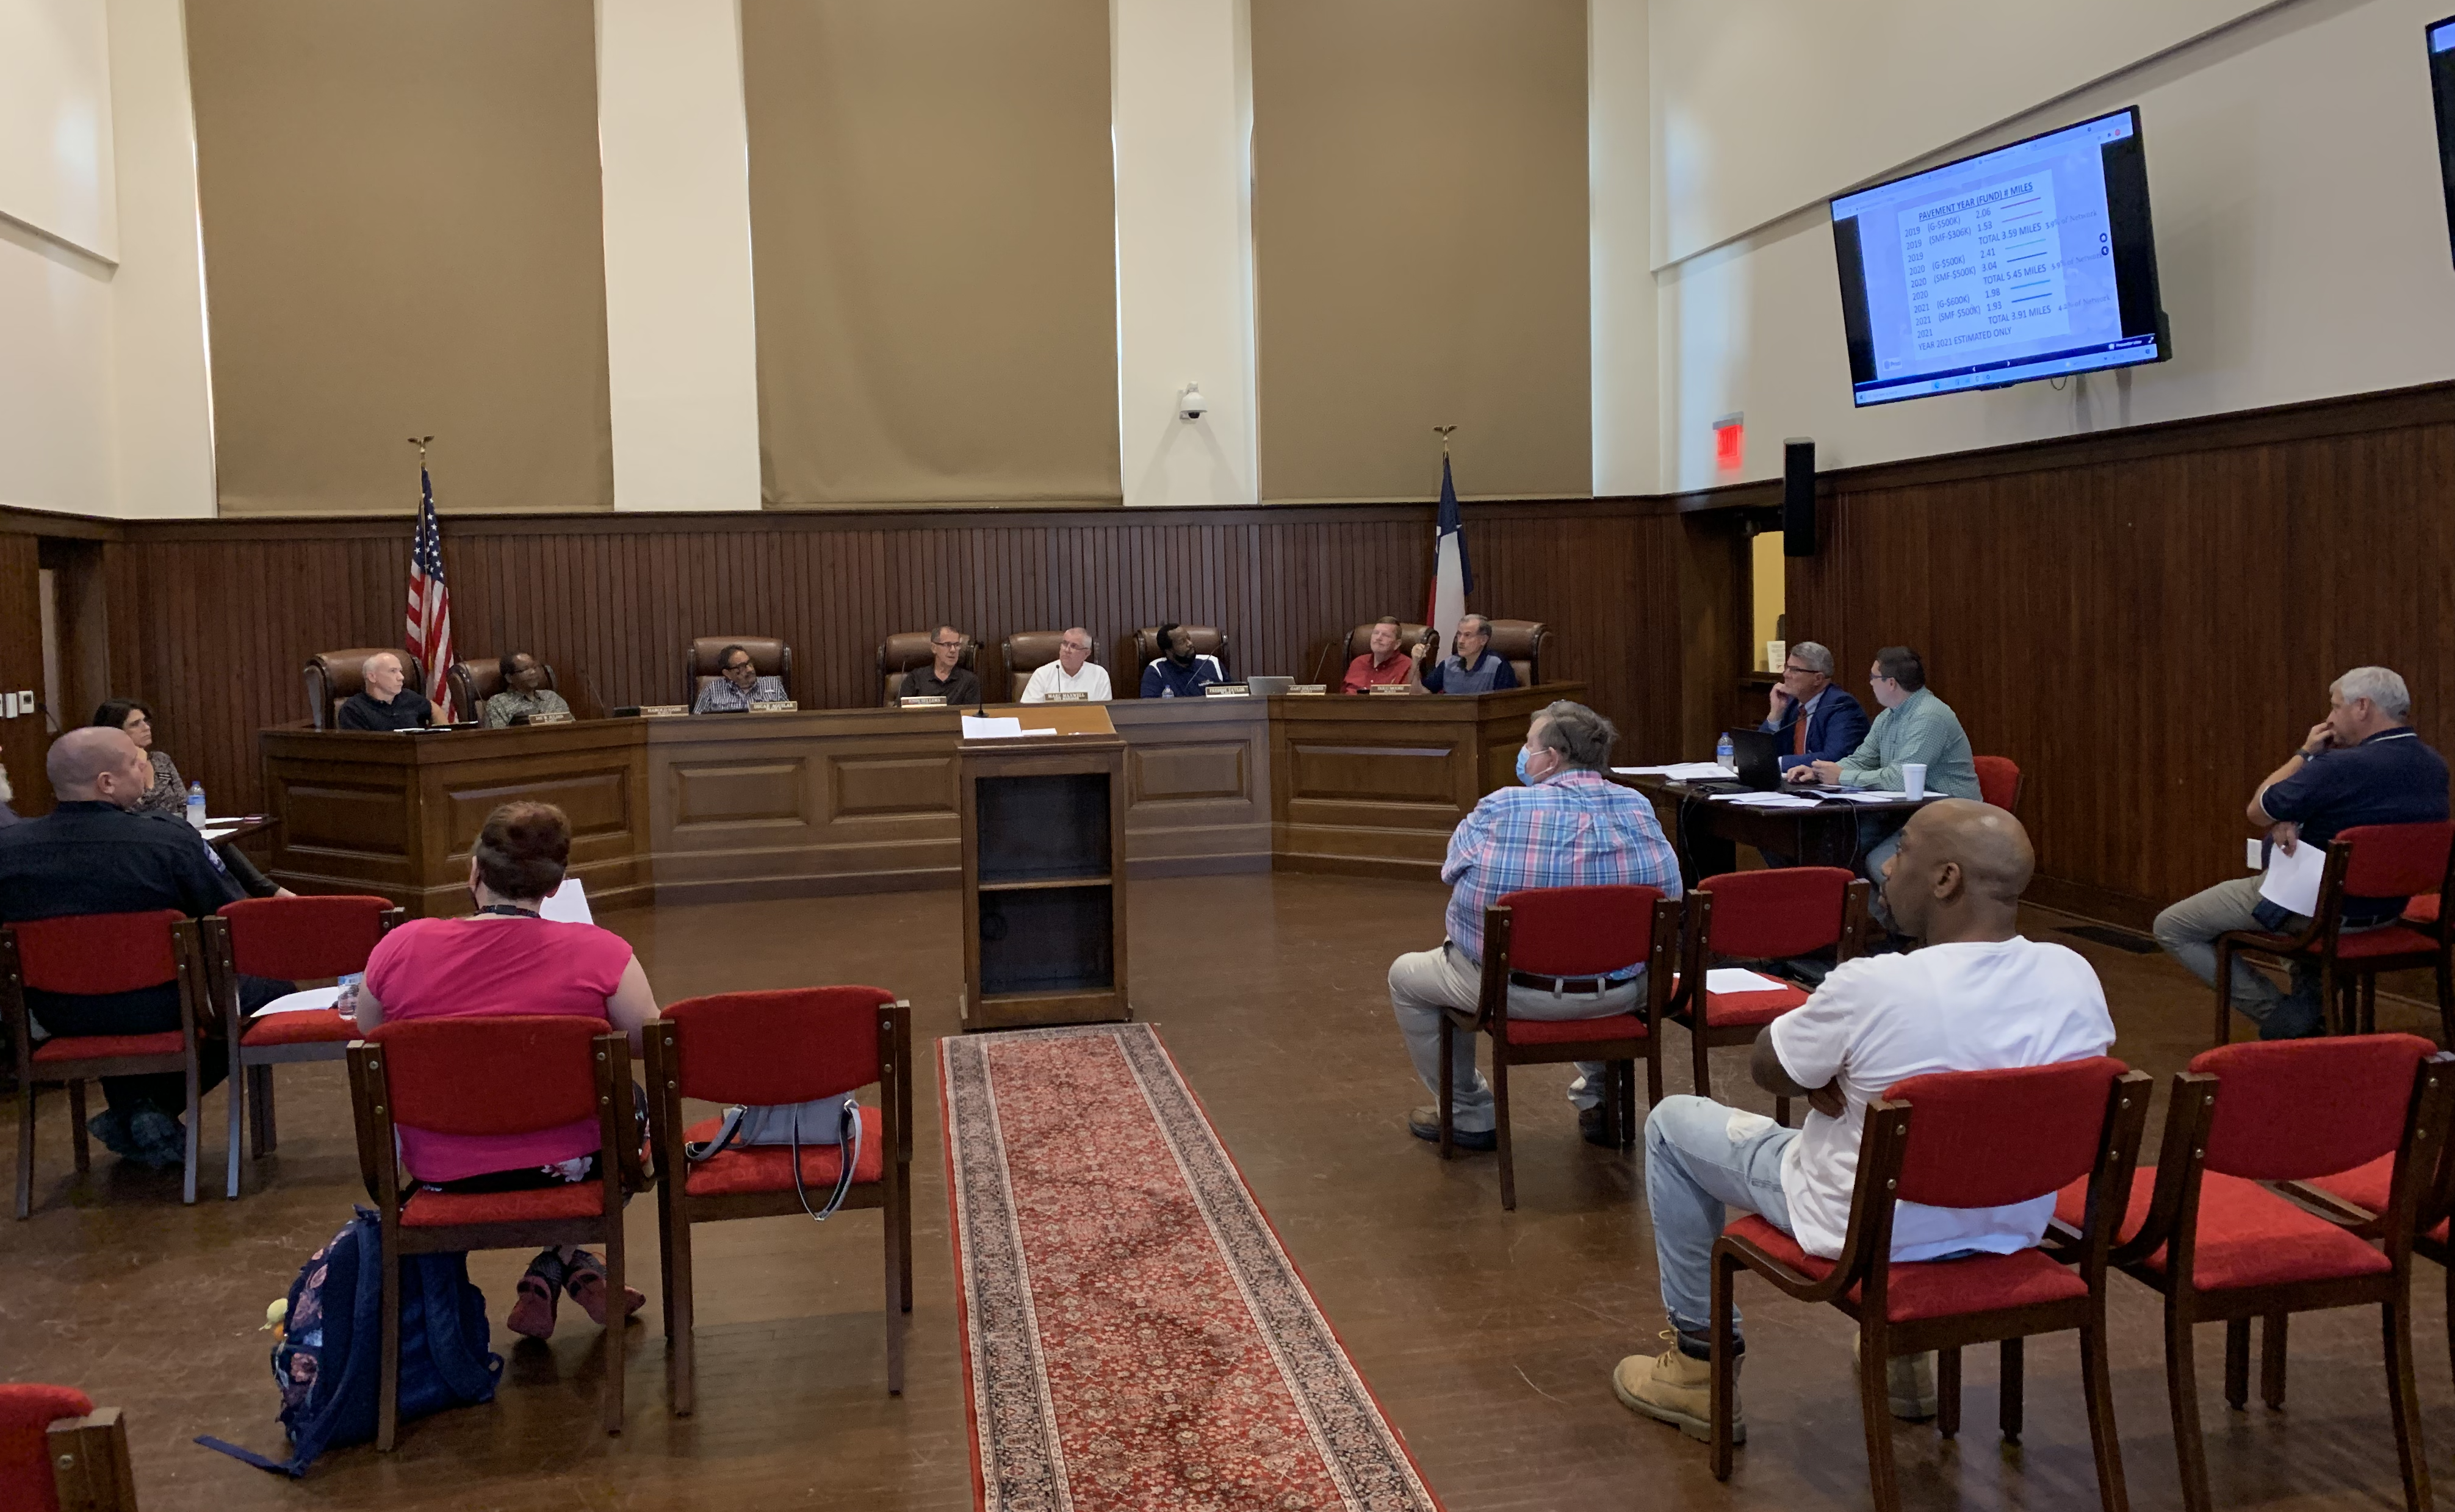 Council debates 380 policy for Lamar lot